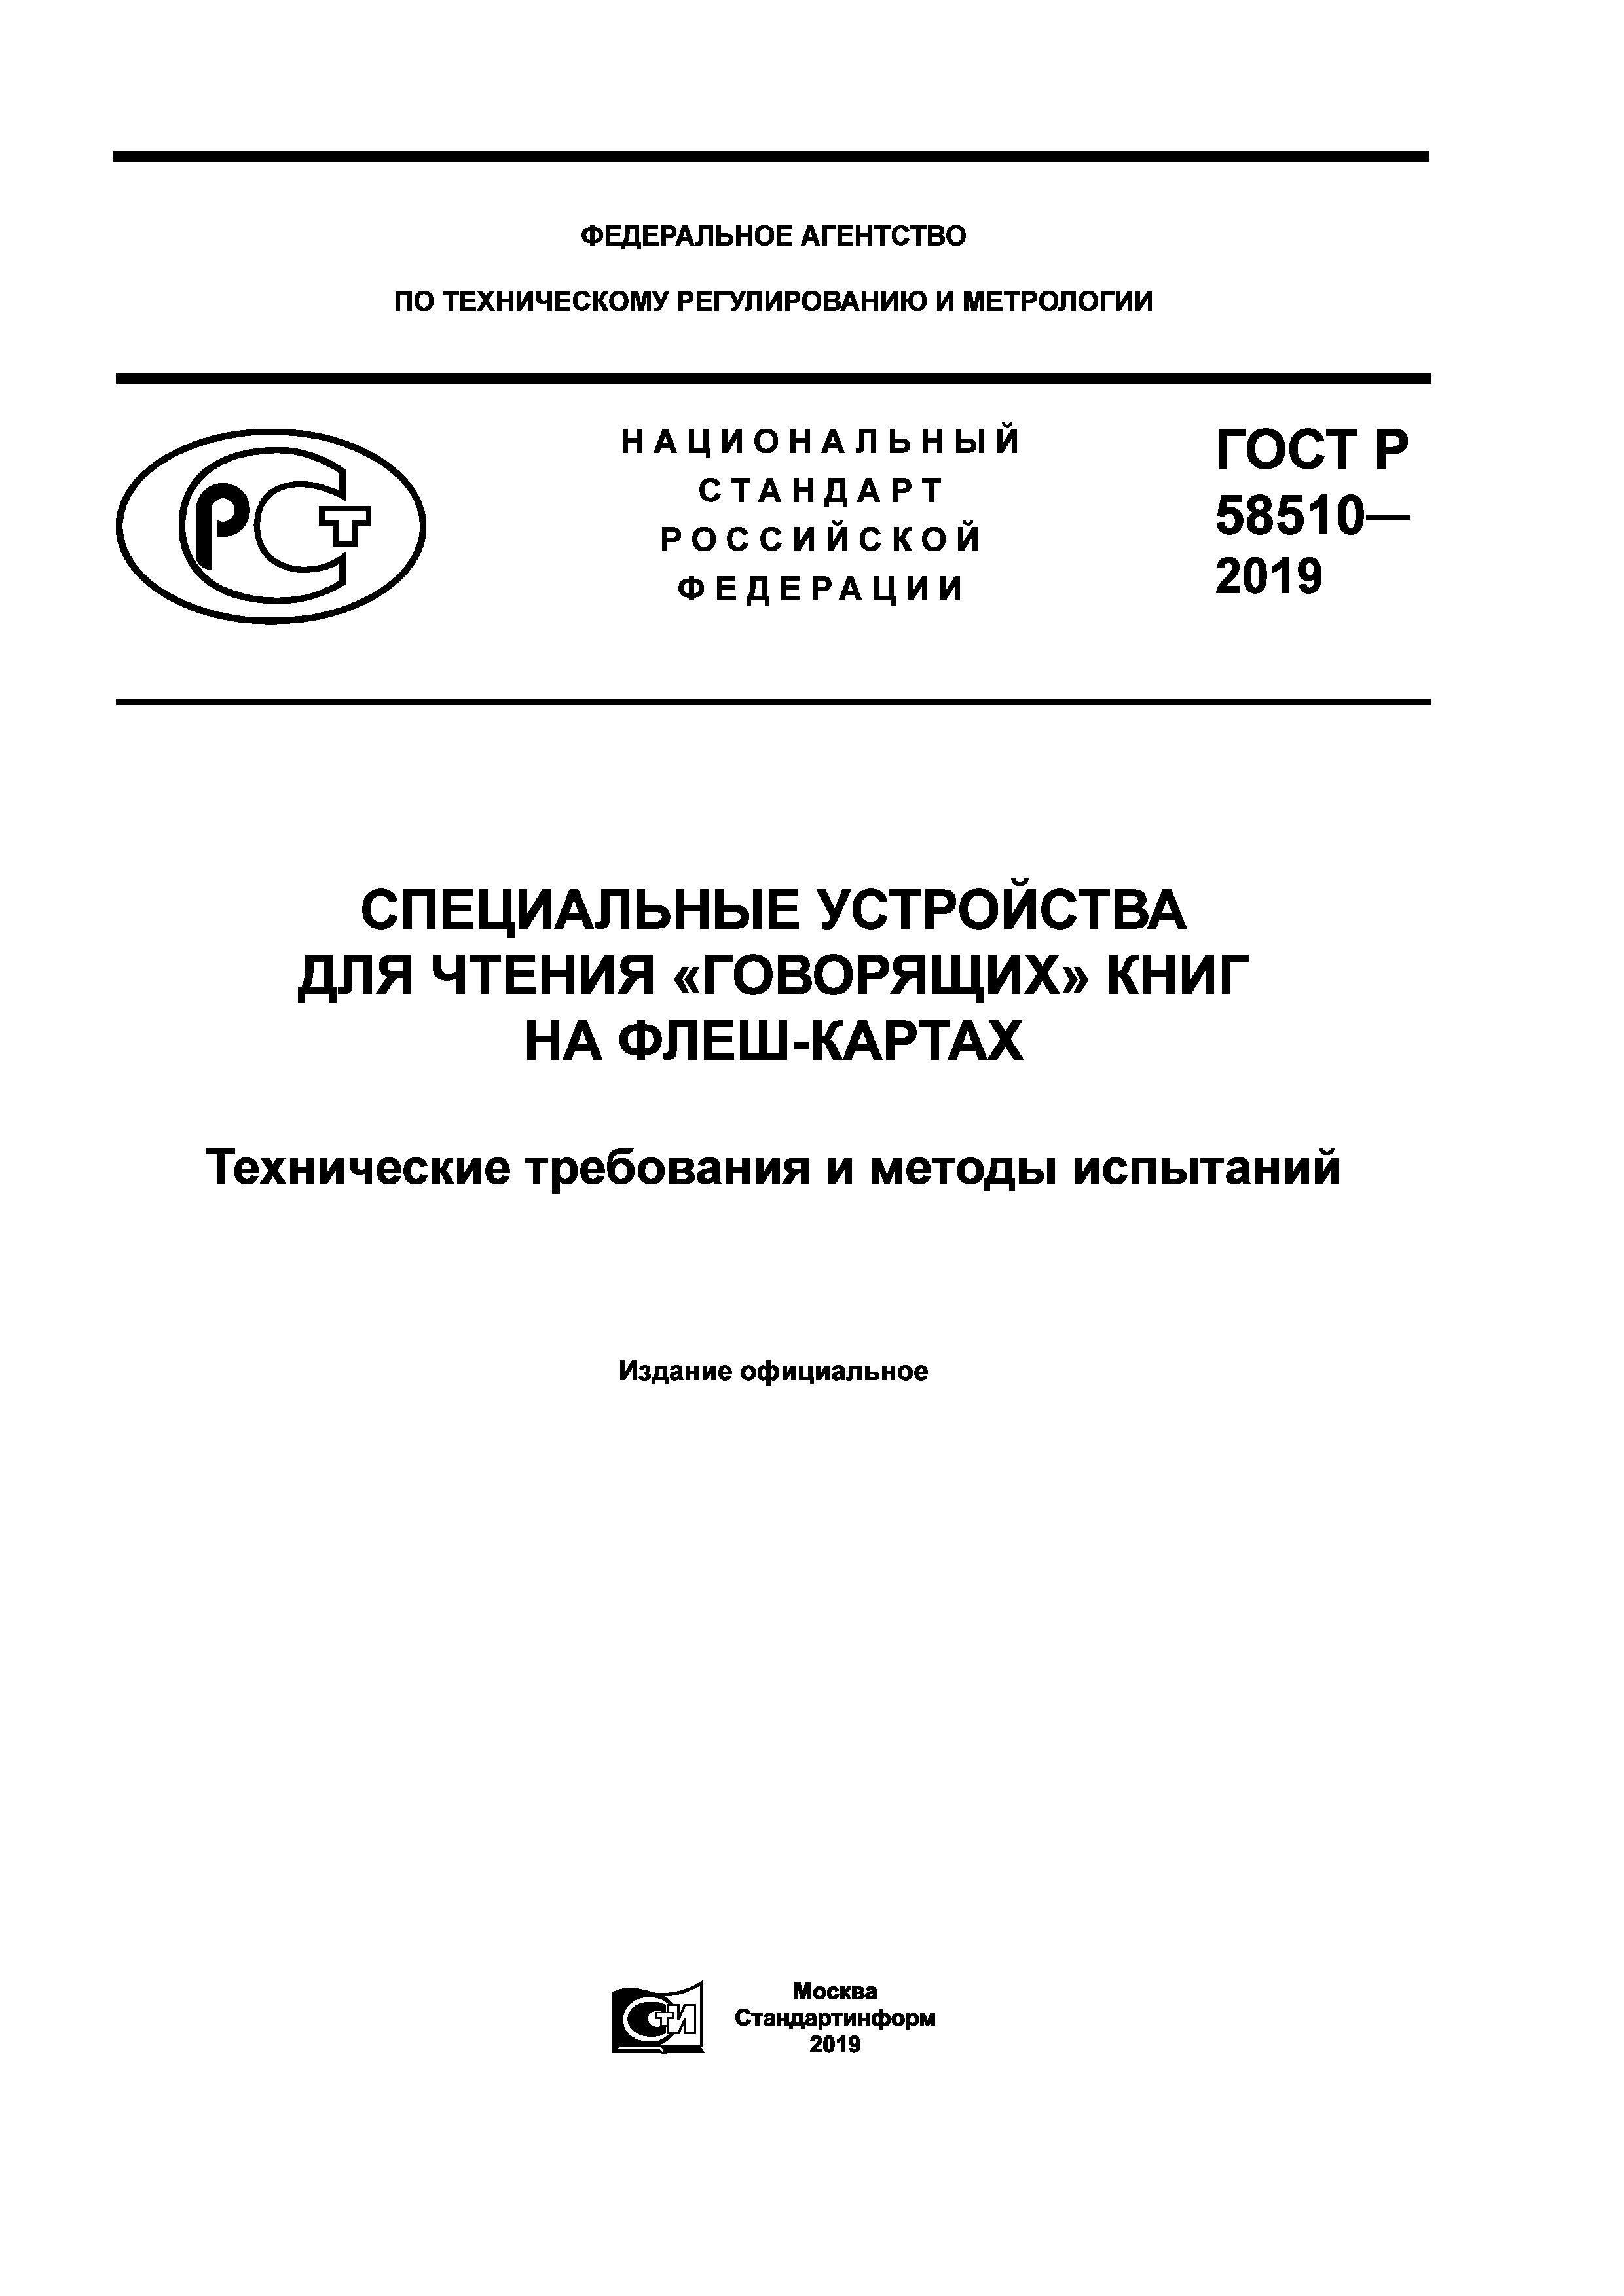 ГОСТ Р 58510-2019